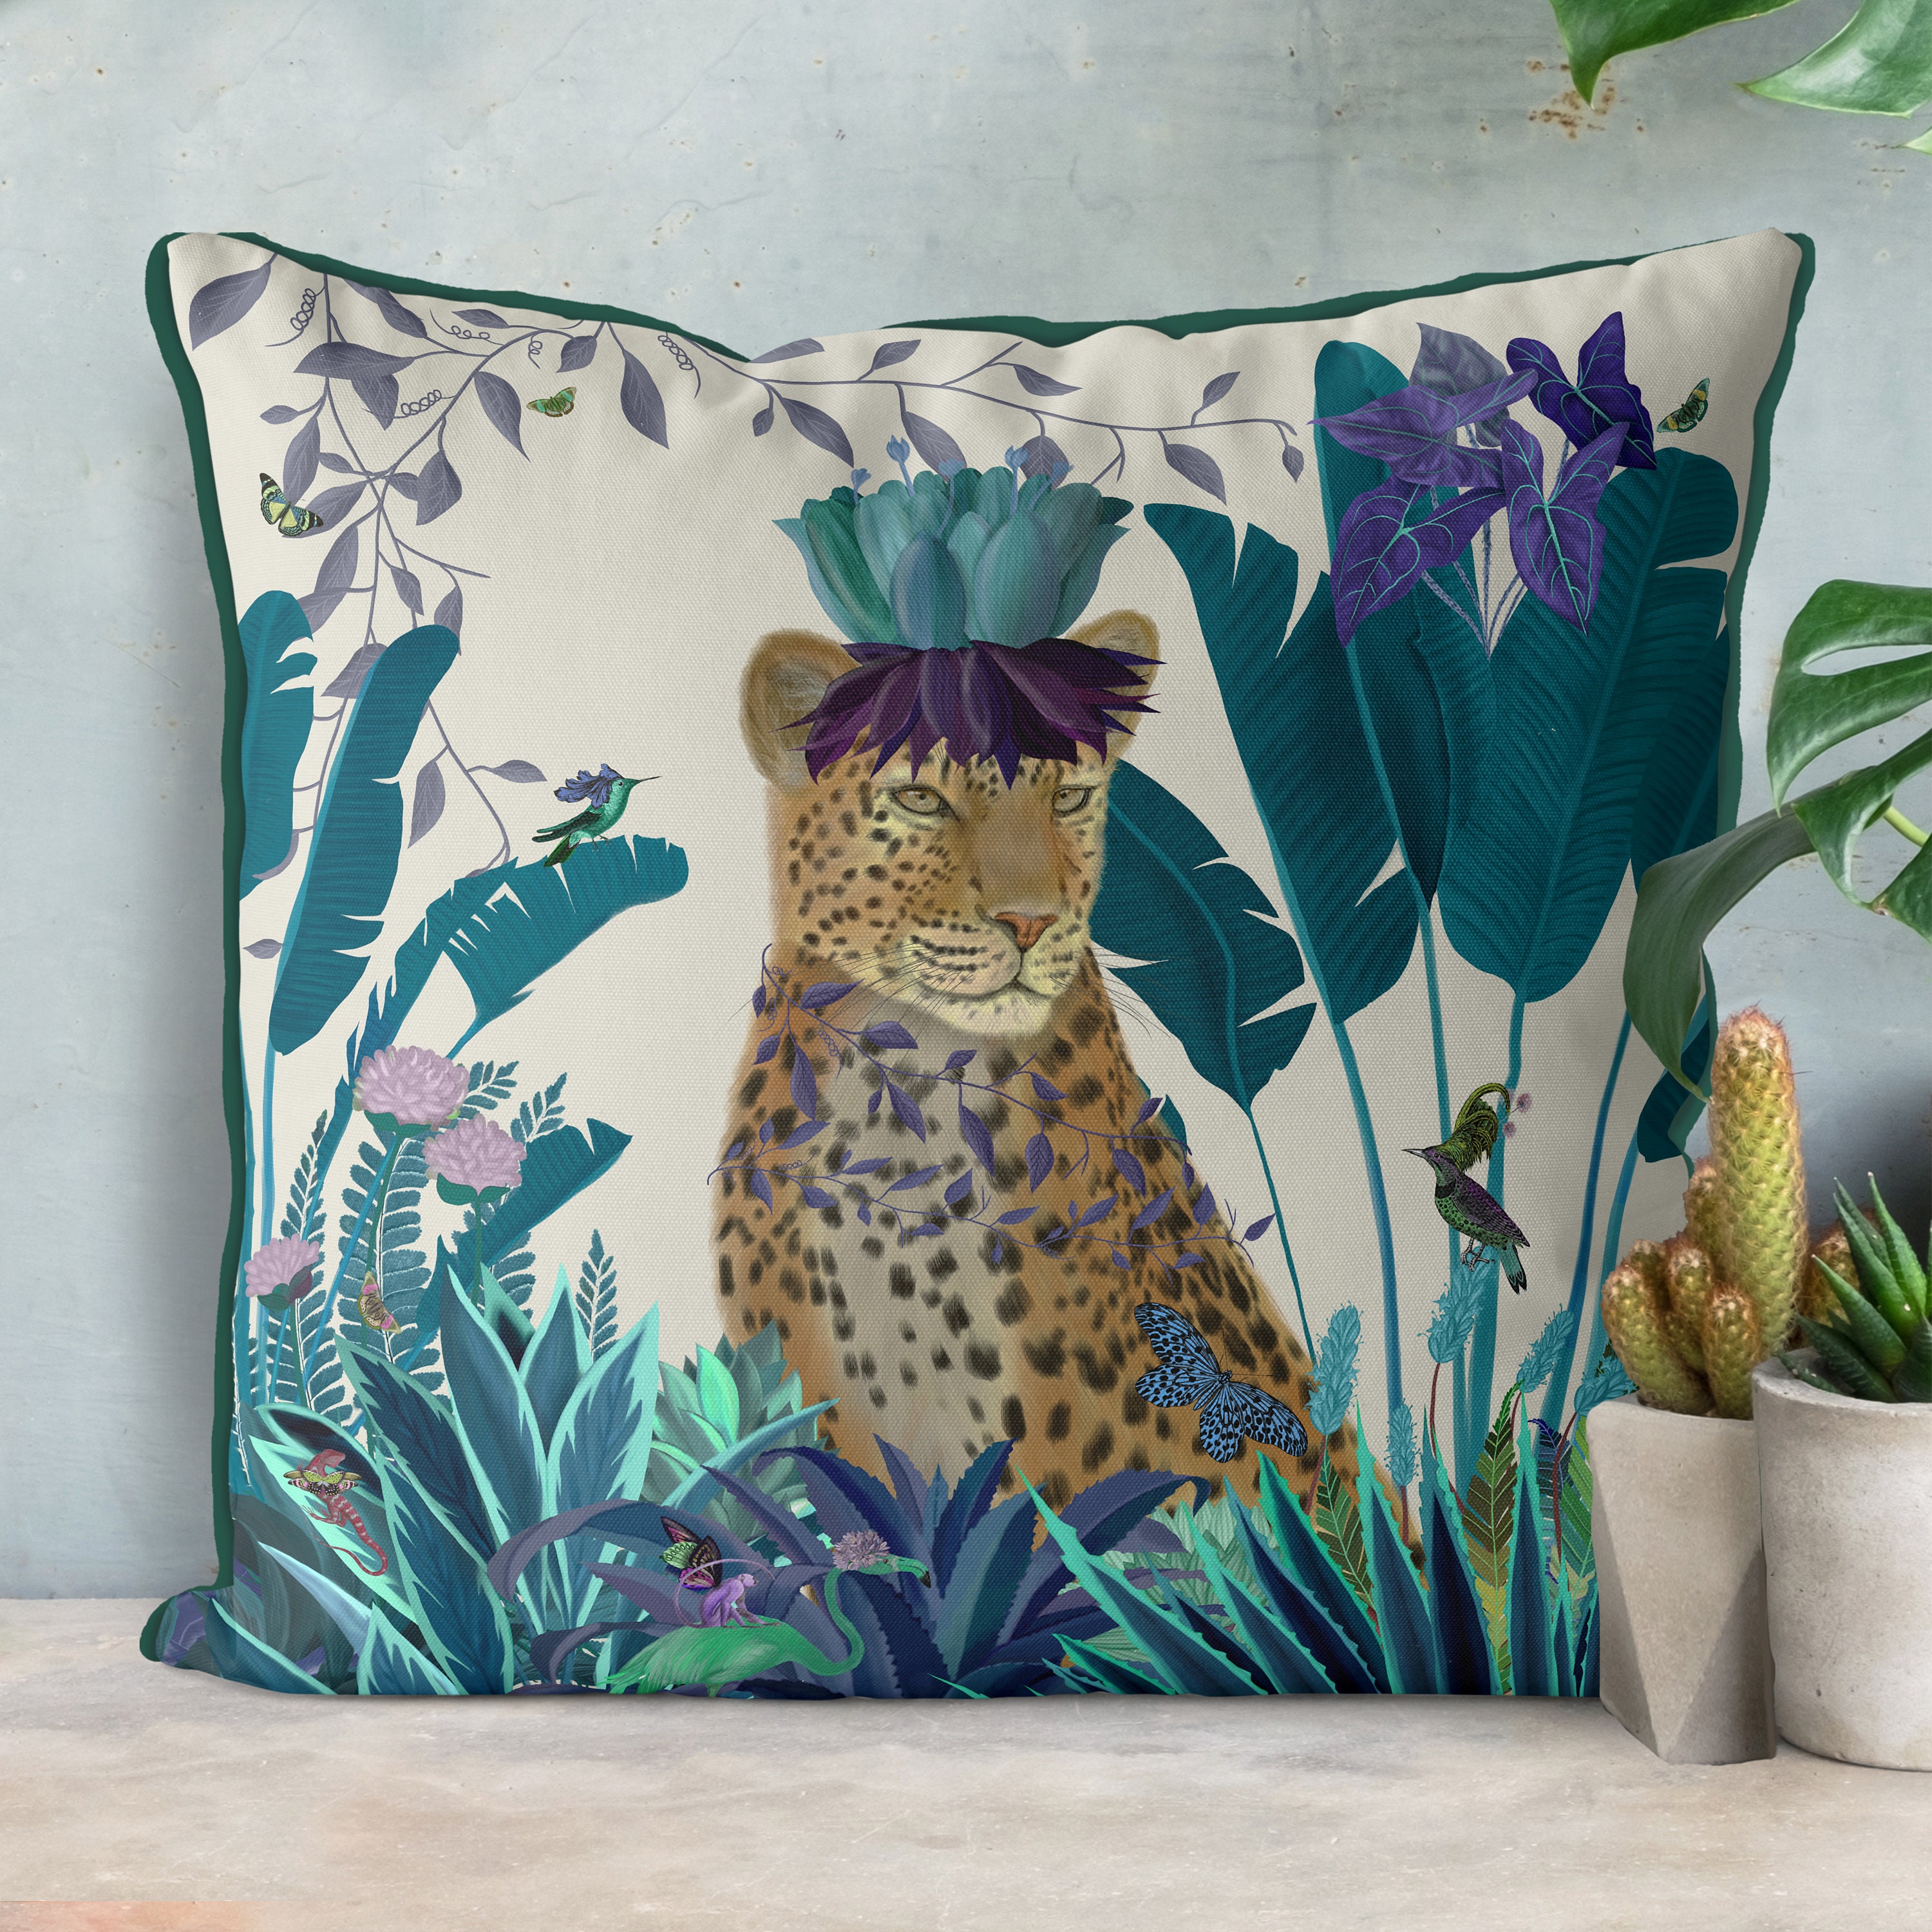 Tropical Animal Decorative Pillow Case 18x18 inch Leopard/ Jaguar Decor cushion cover 45x45cm Panthers Throw Pillow Cover